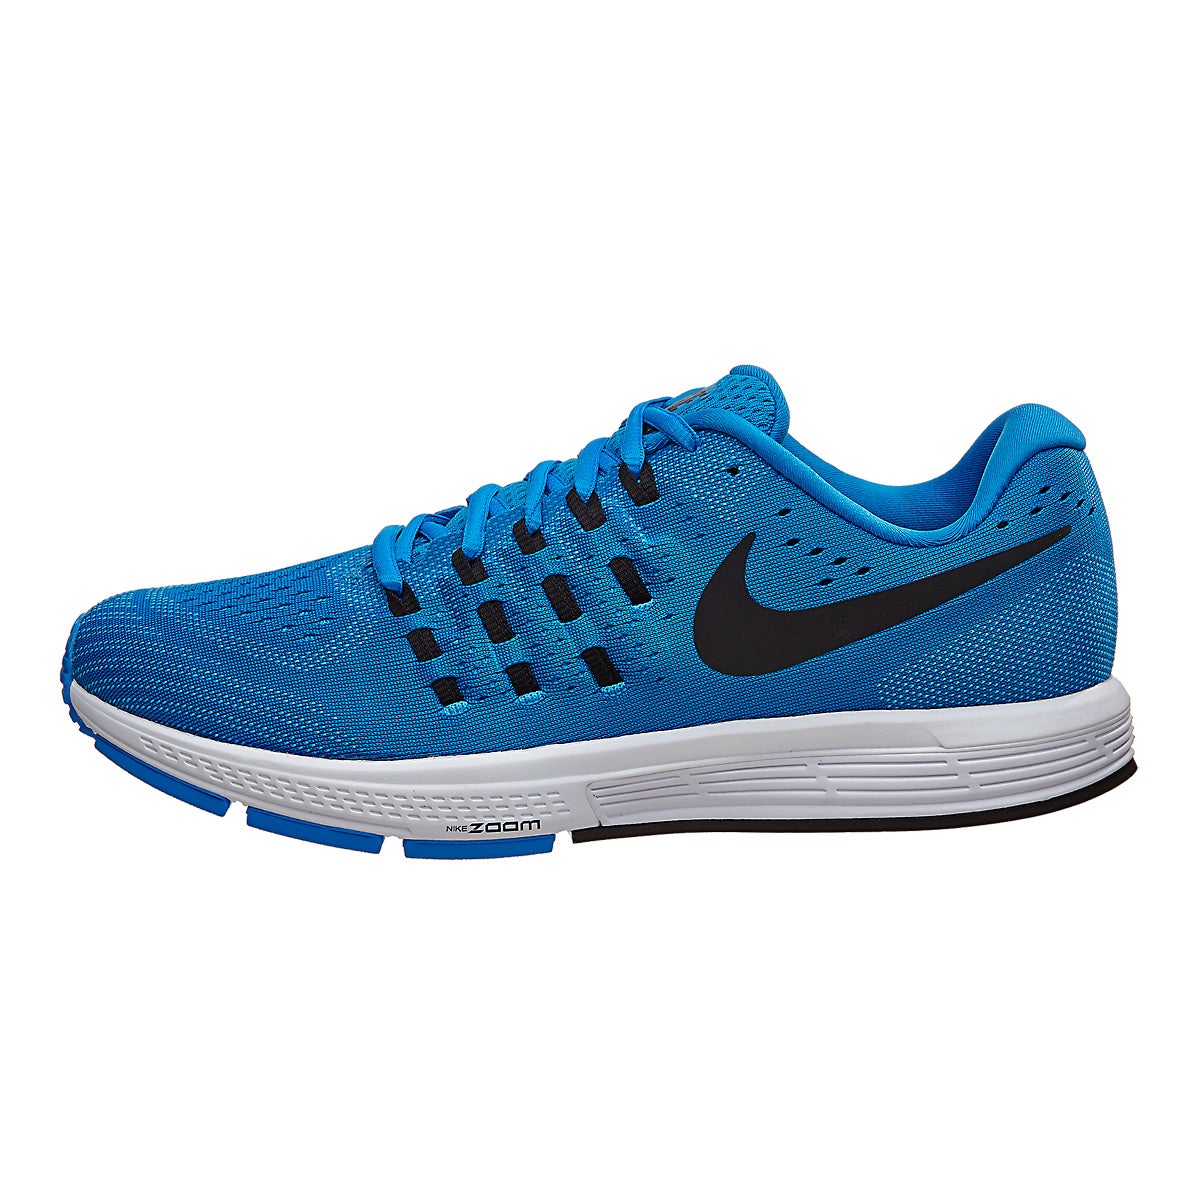 Nike Zoom Vomero 11 Men's Shoes Blue/Black/White 360° View | Running ...